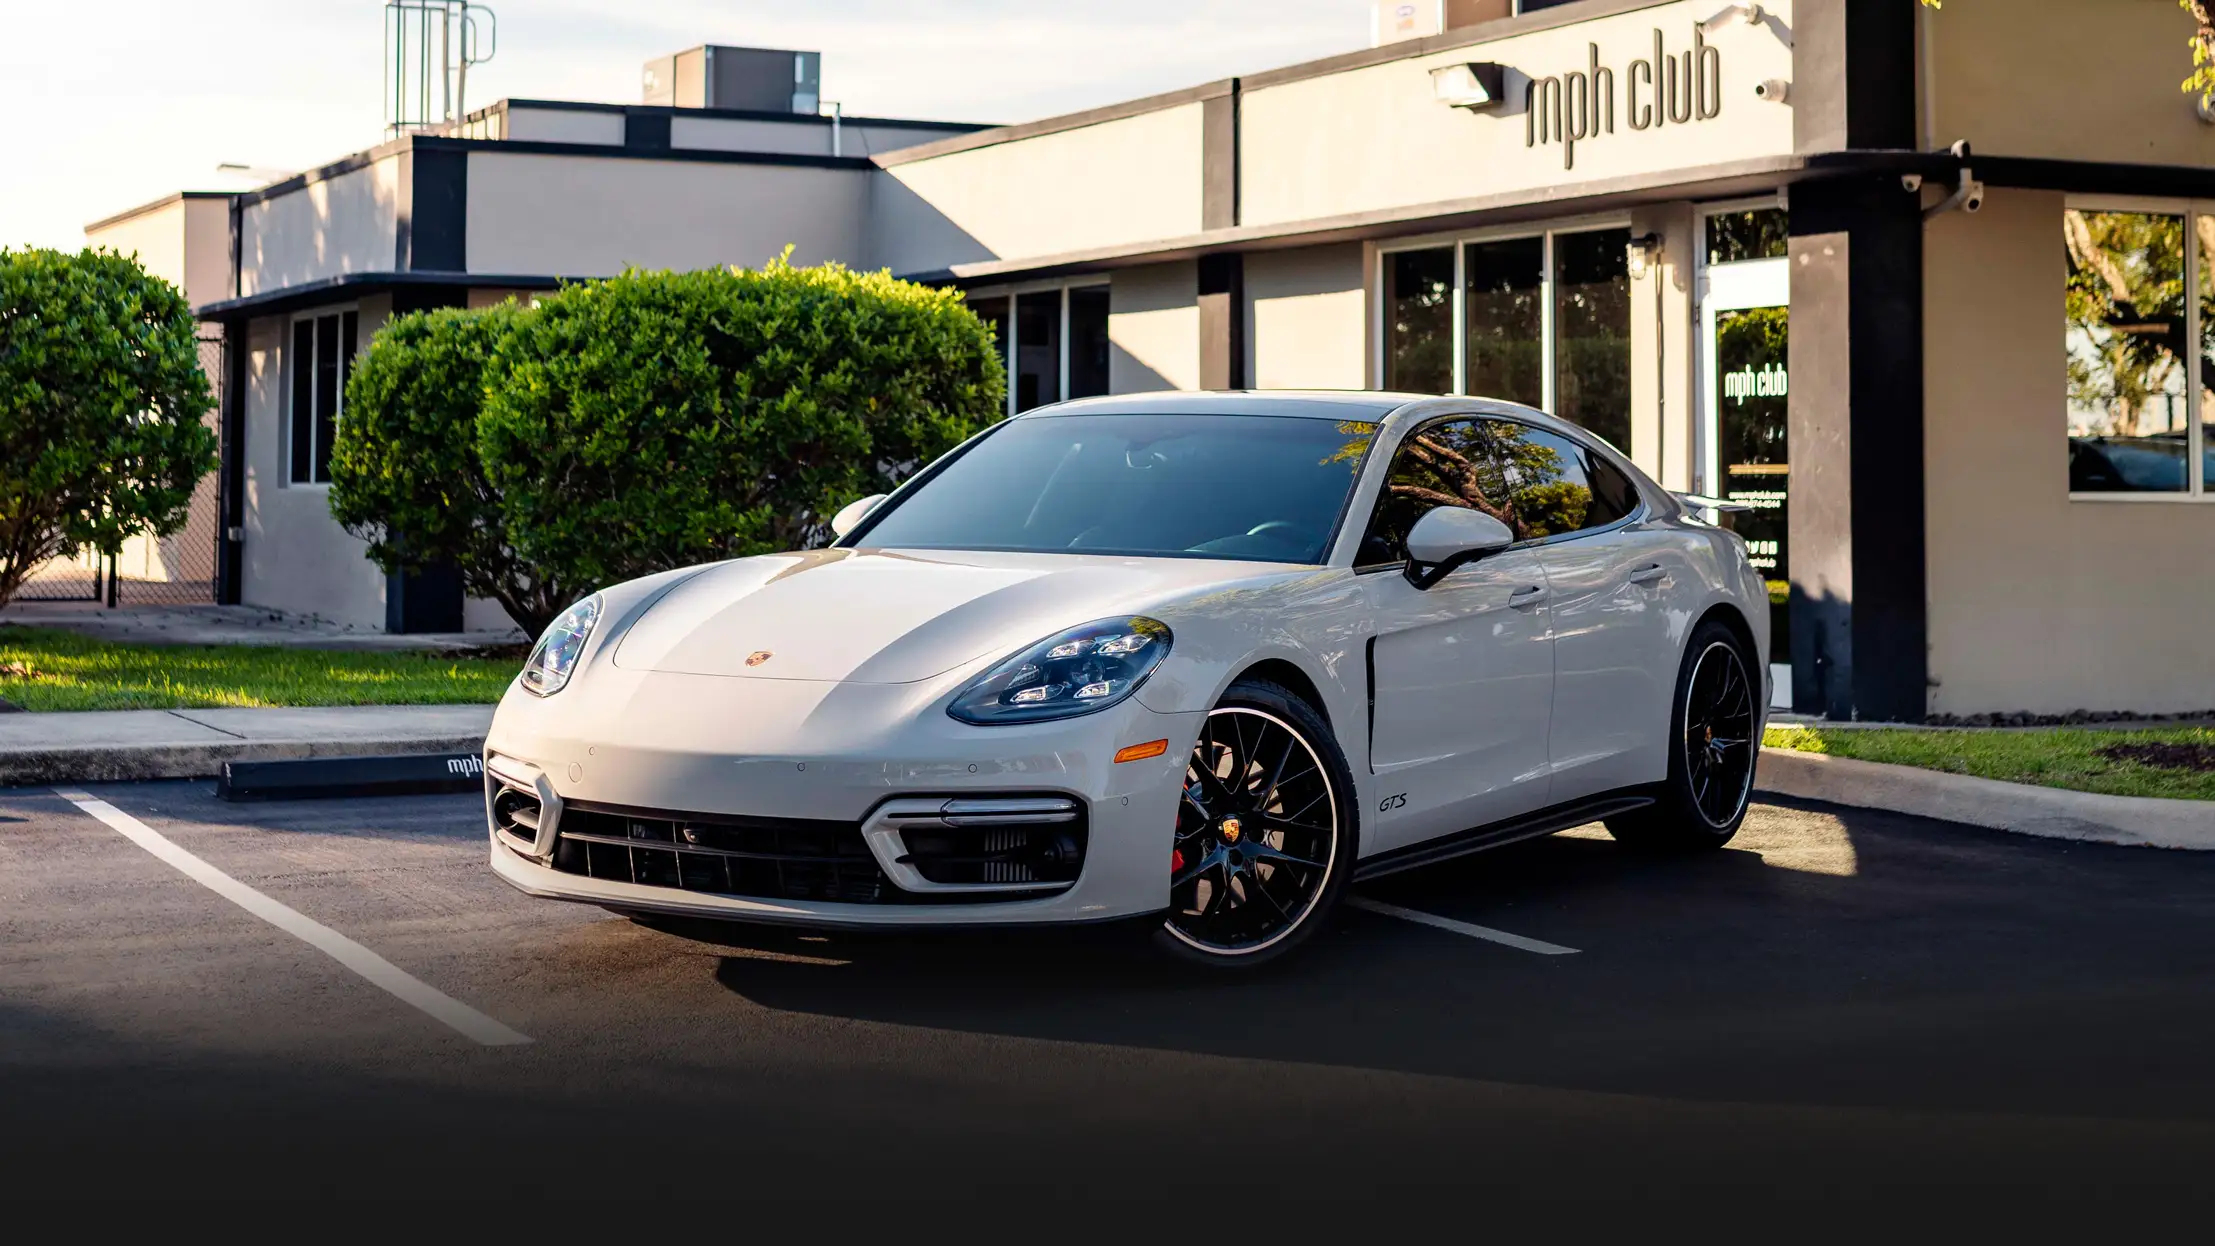 Grey Porsche Panamera GTS rental Miami profile view mph club